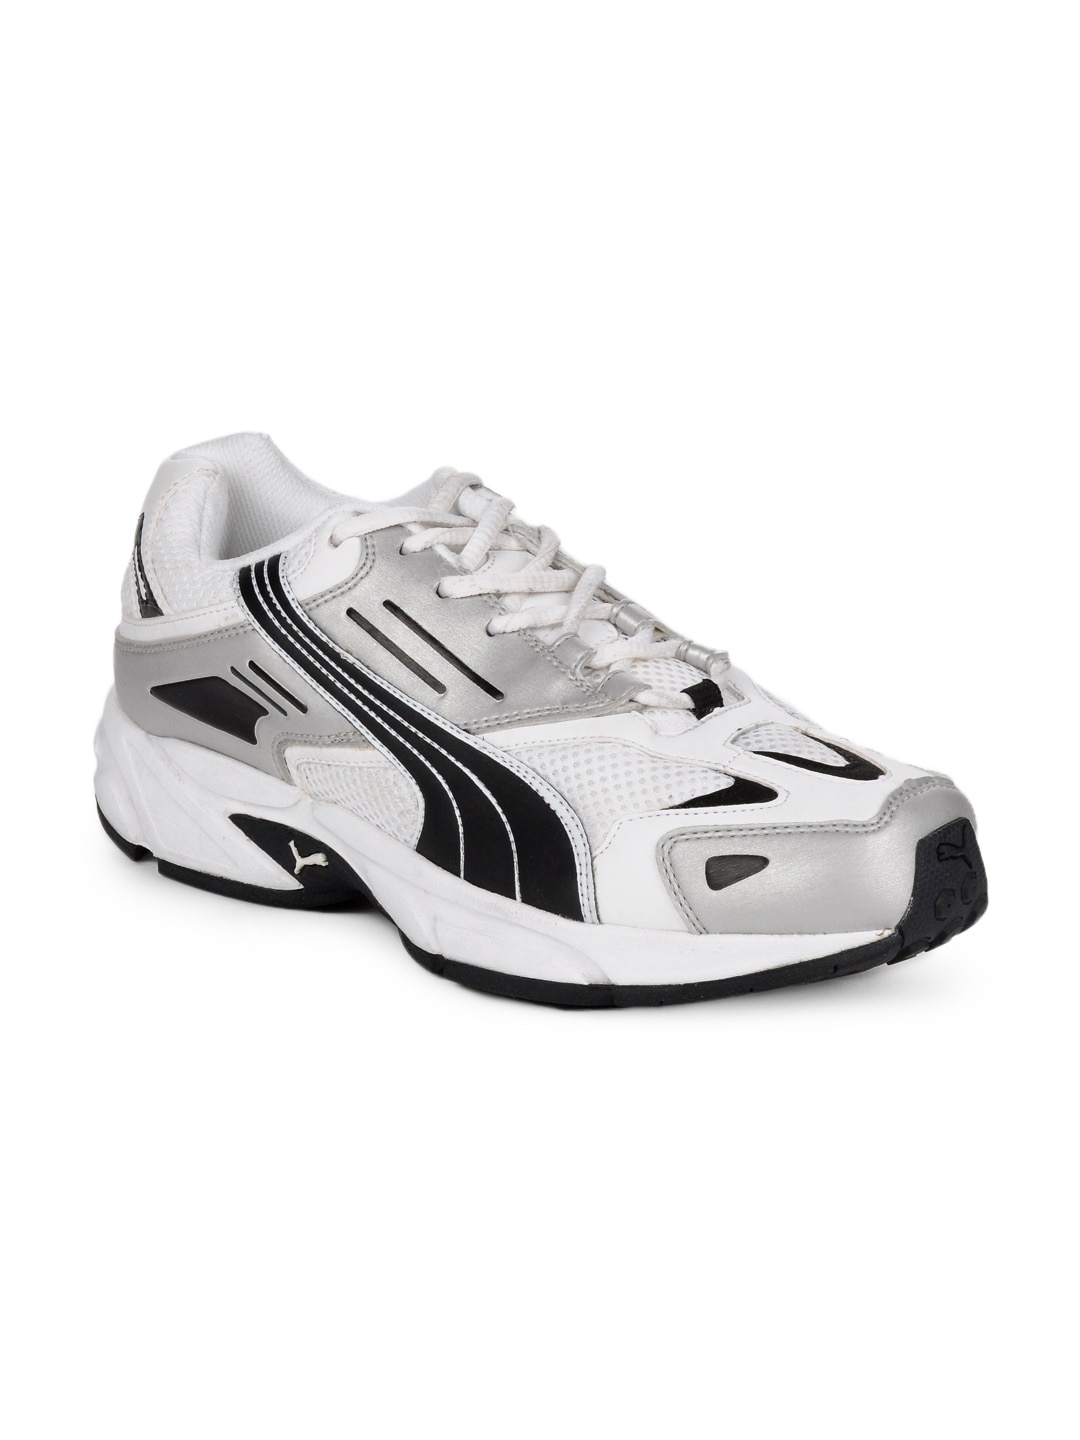 Puma Men Cat Runner White Sports Shoes